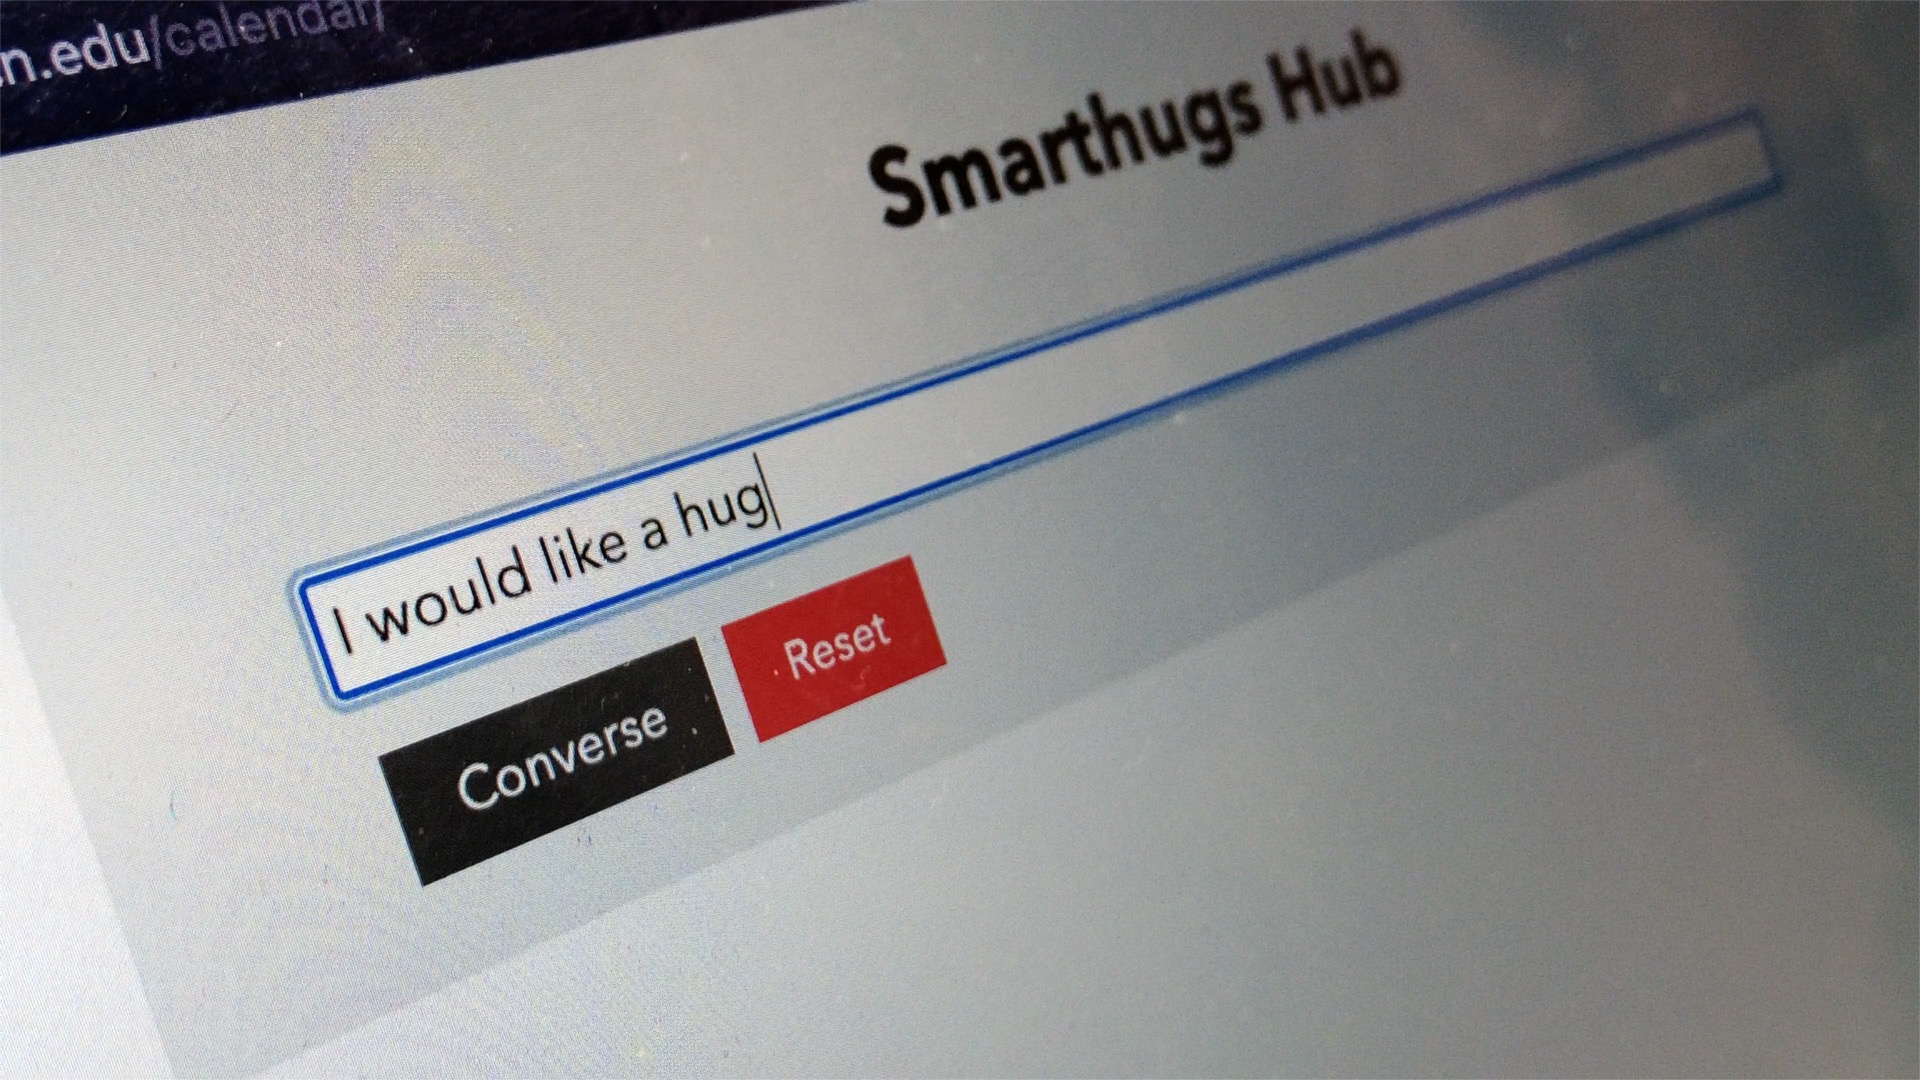 Photo of Smarthugs Hub text interface